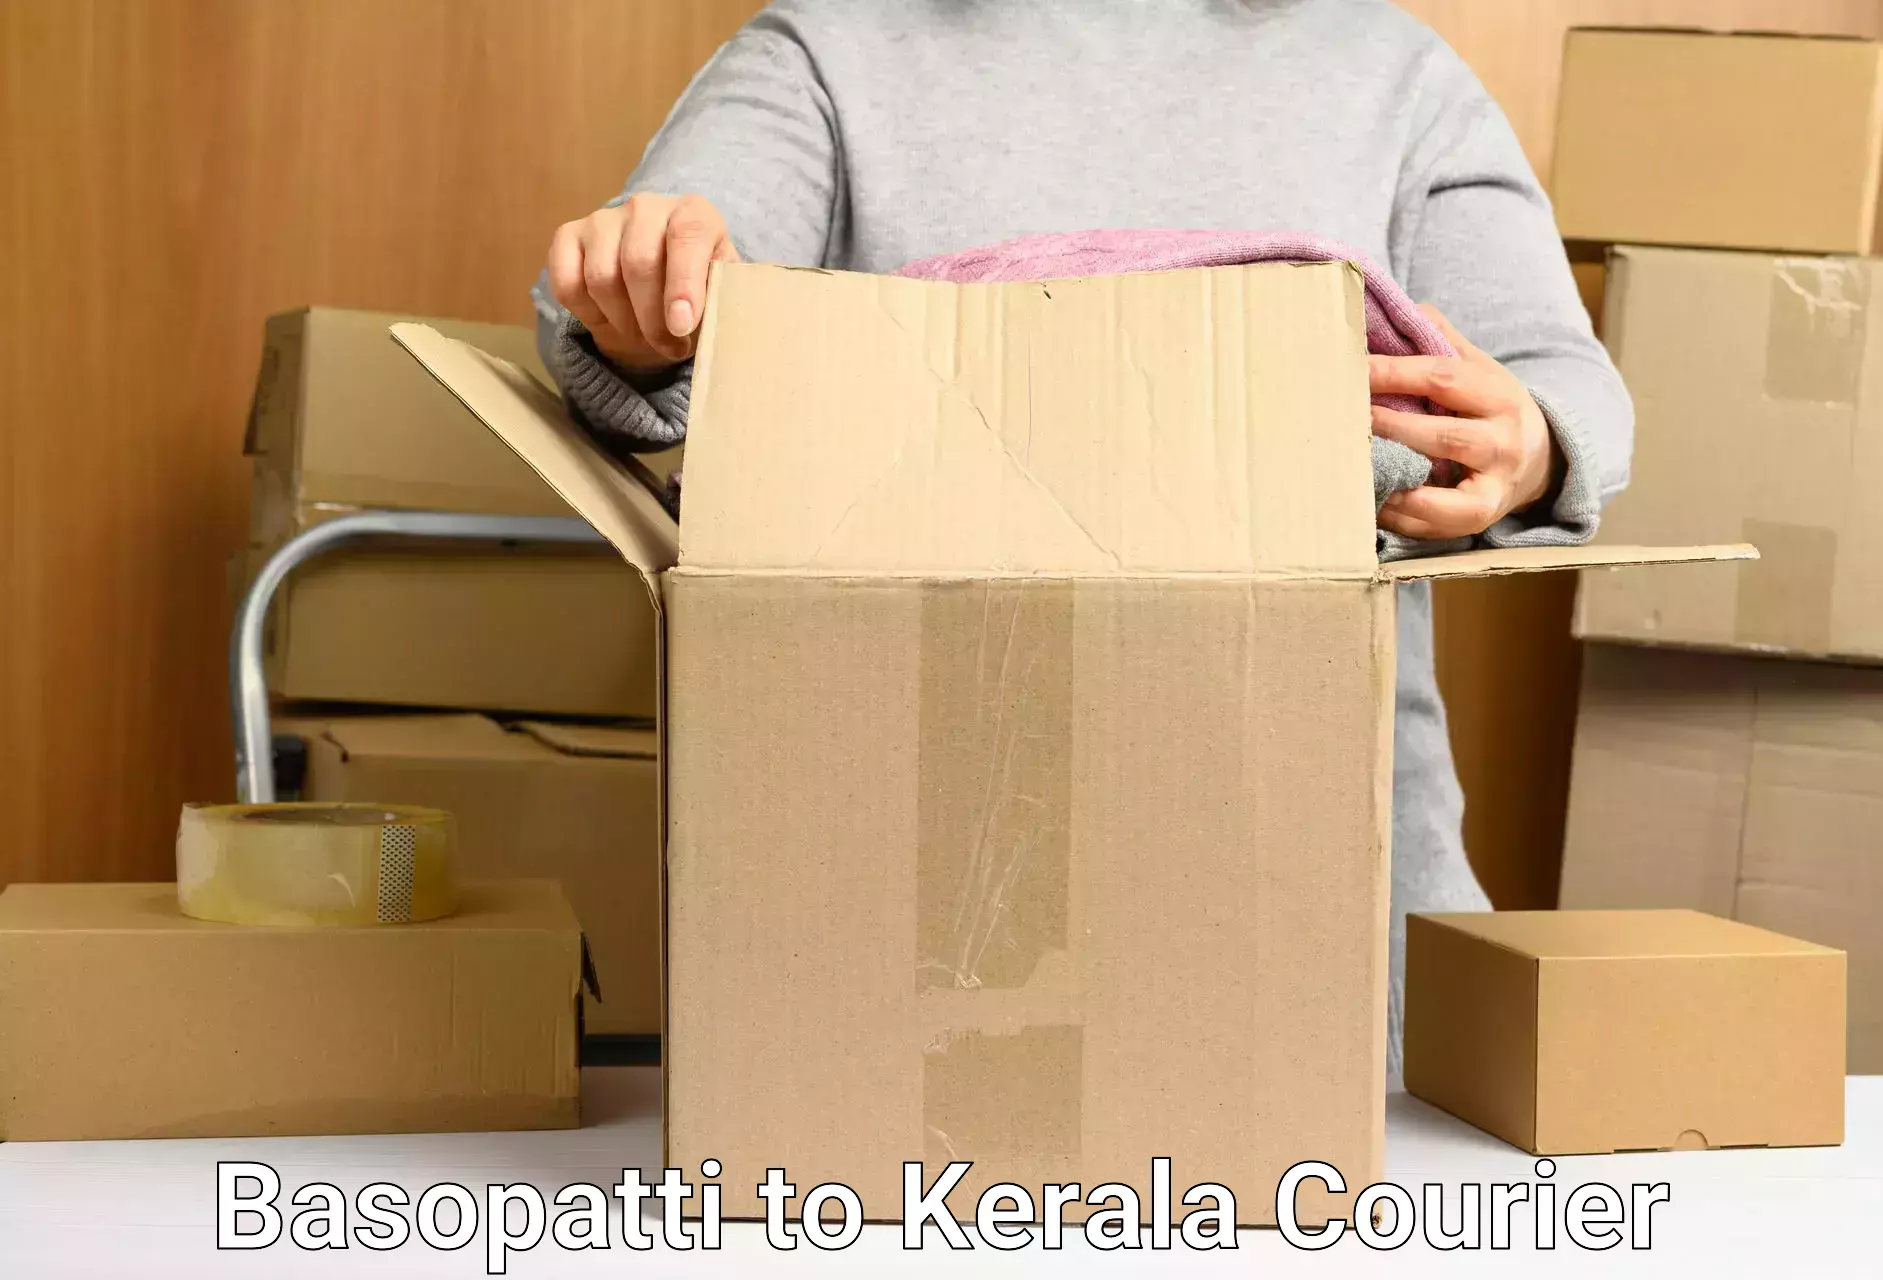 Online package tracking Basopatti to Kochi